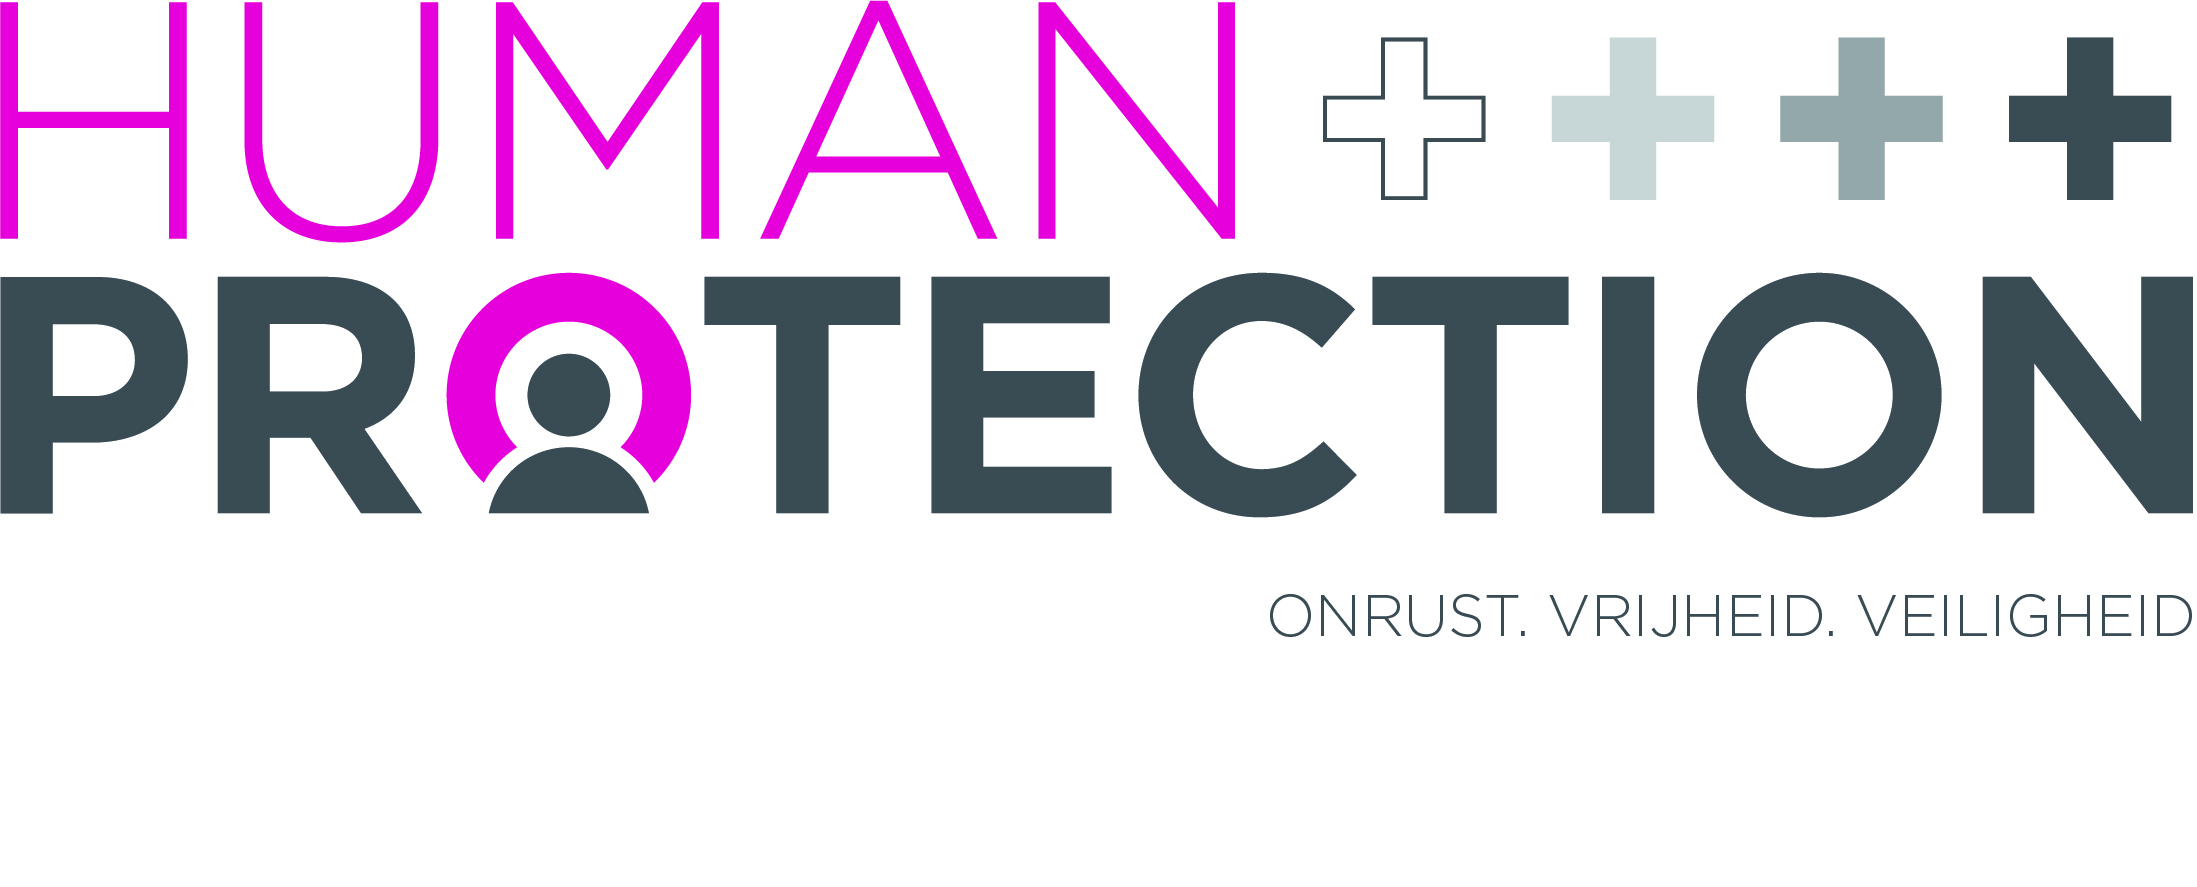 HumanProtection_MerkMarketing_logo_2019.jpg